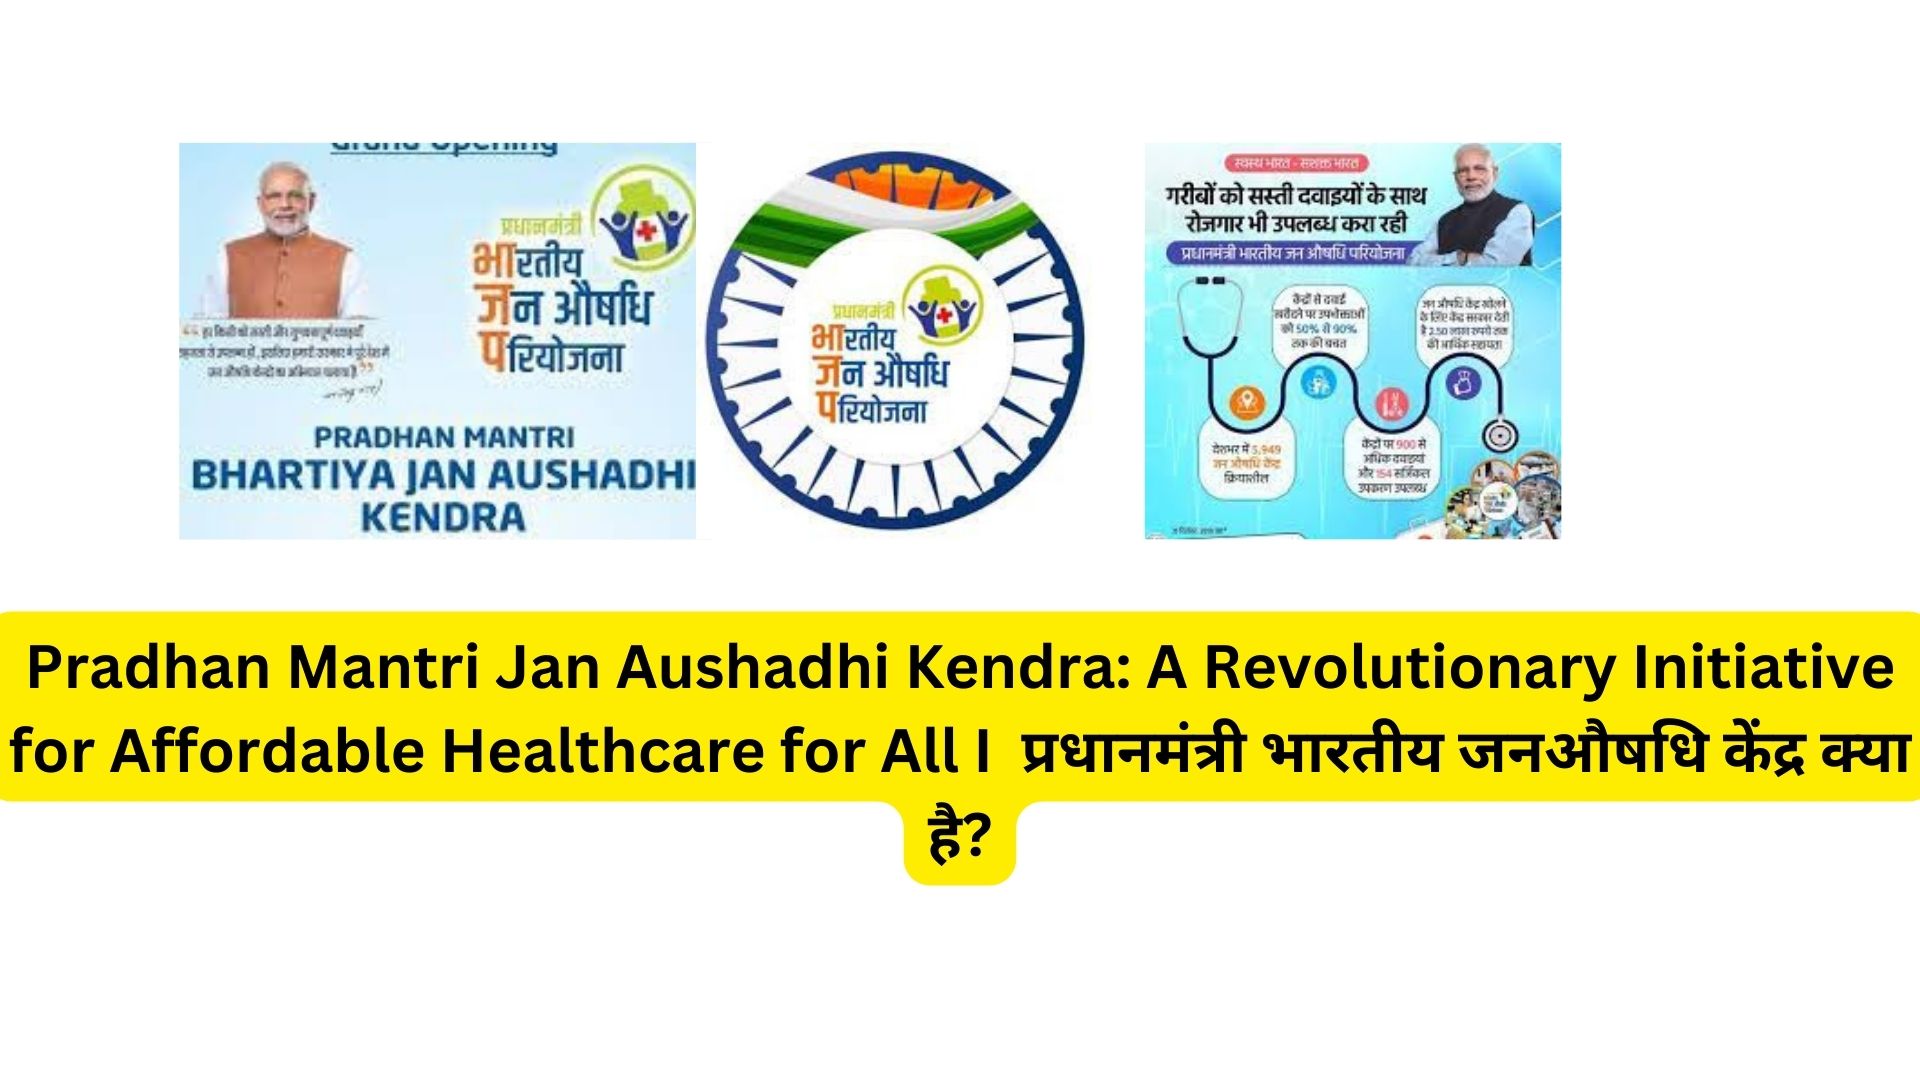 Pradhan Mantri Jan Aushadhi Kendra: A Revolutionary Initiative for Affordable Healthcare for All I प्रधानमंत्री भारतीय जनऔषधि केंद्र क्या है?